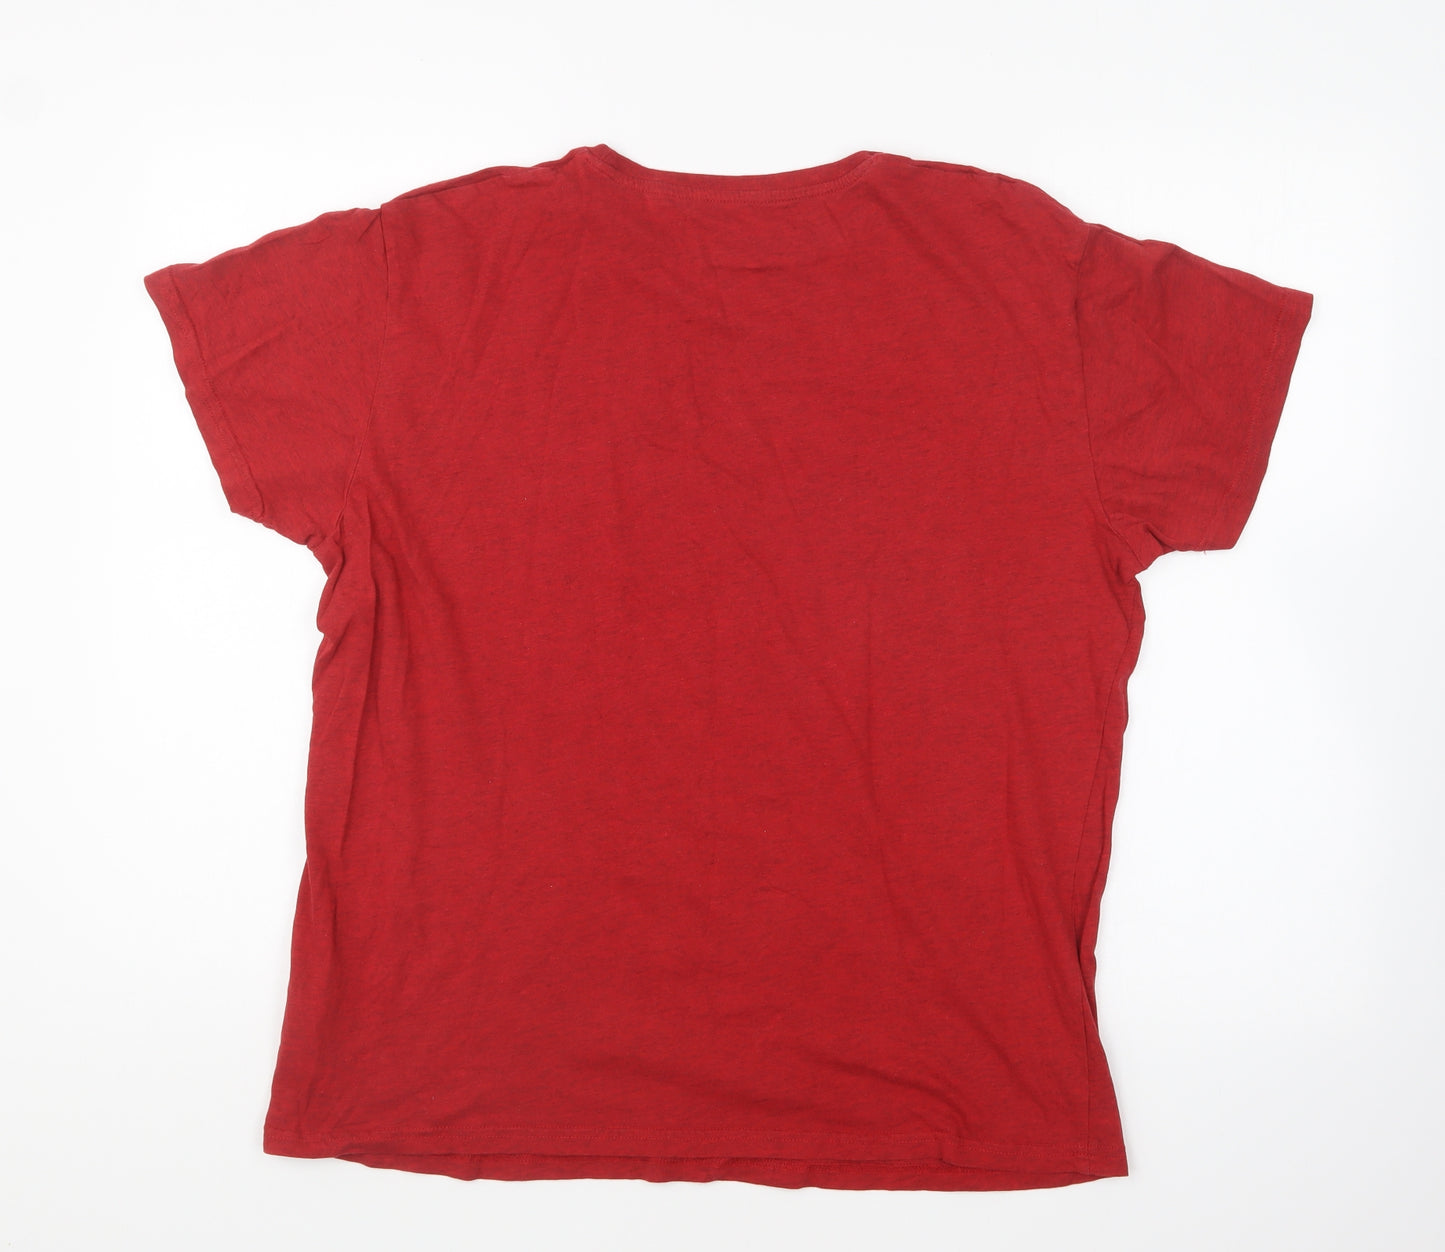 Primark Mens Red Cotton T-Shirt Size L Round Neck - California